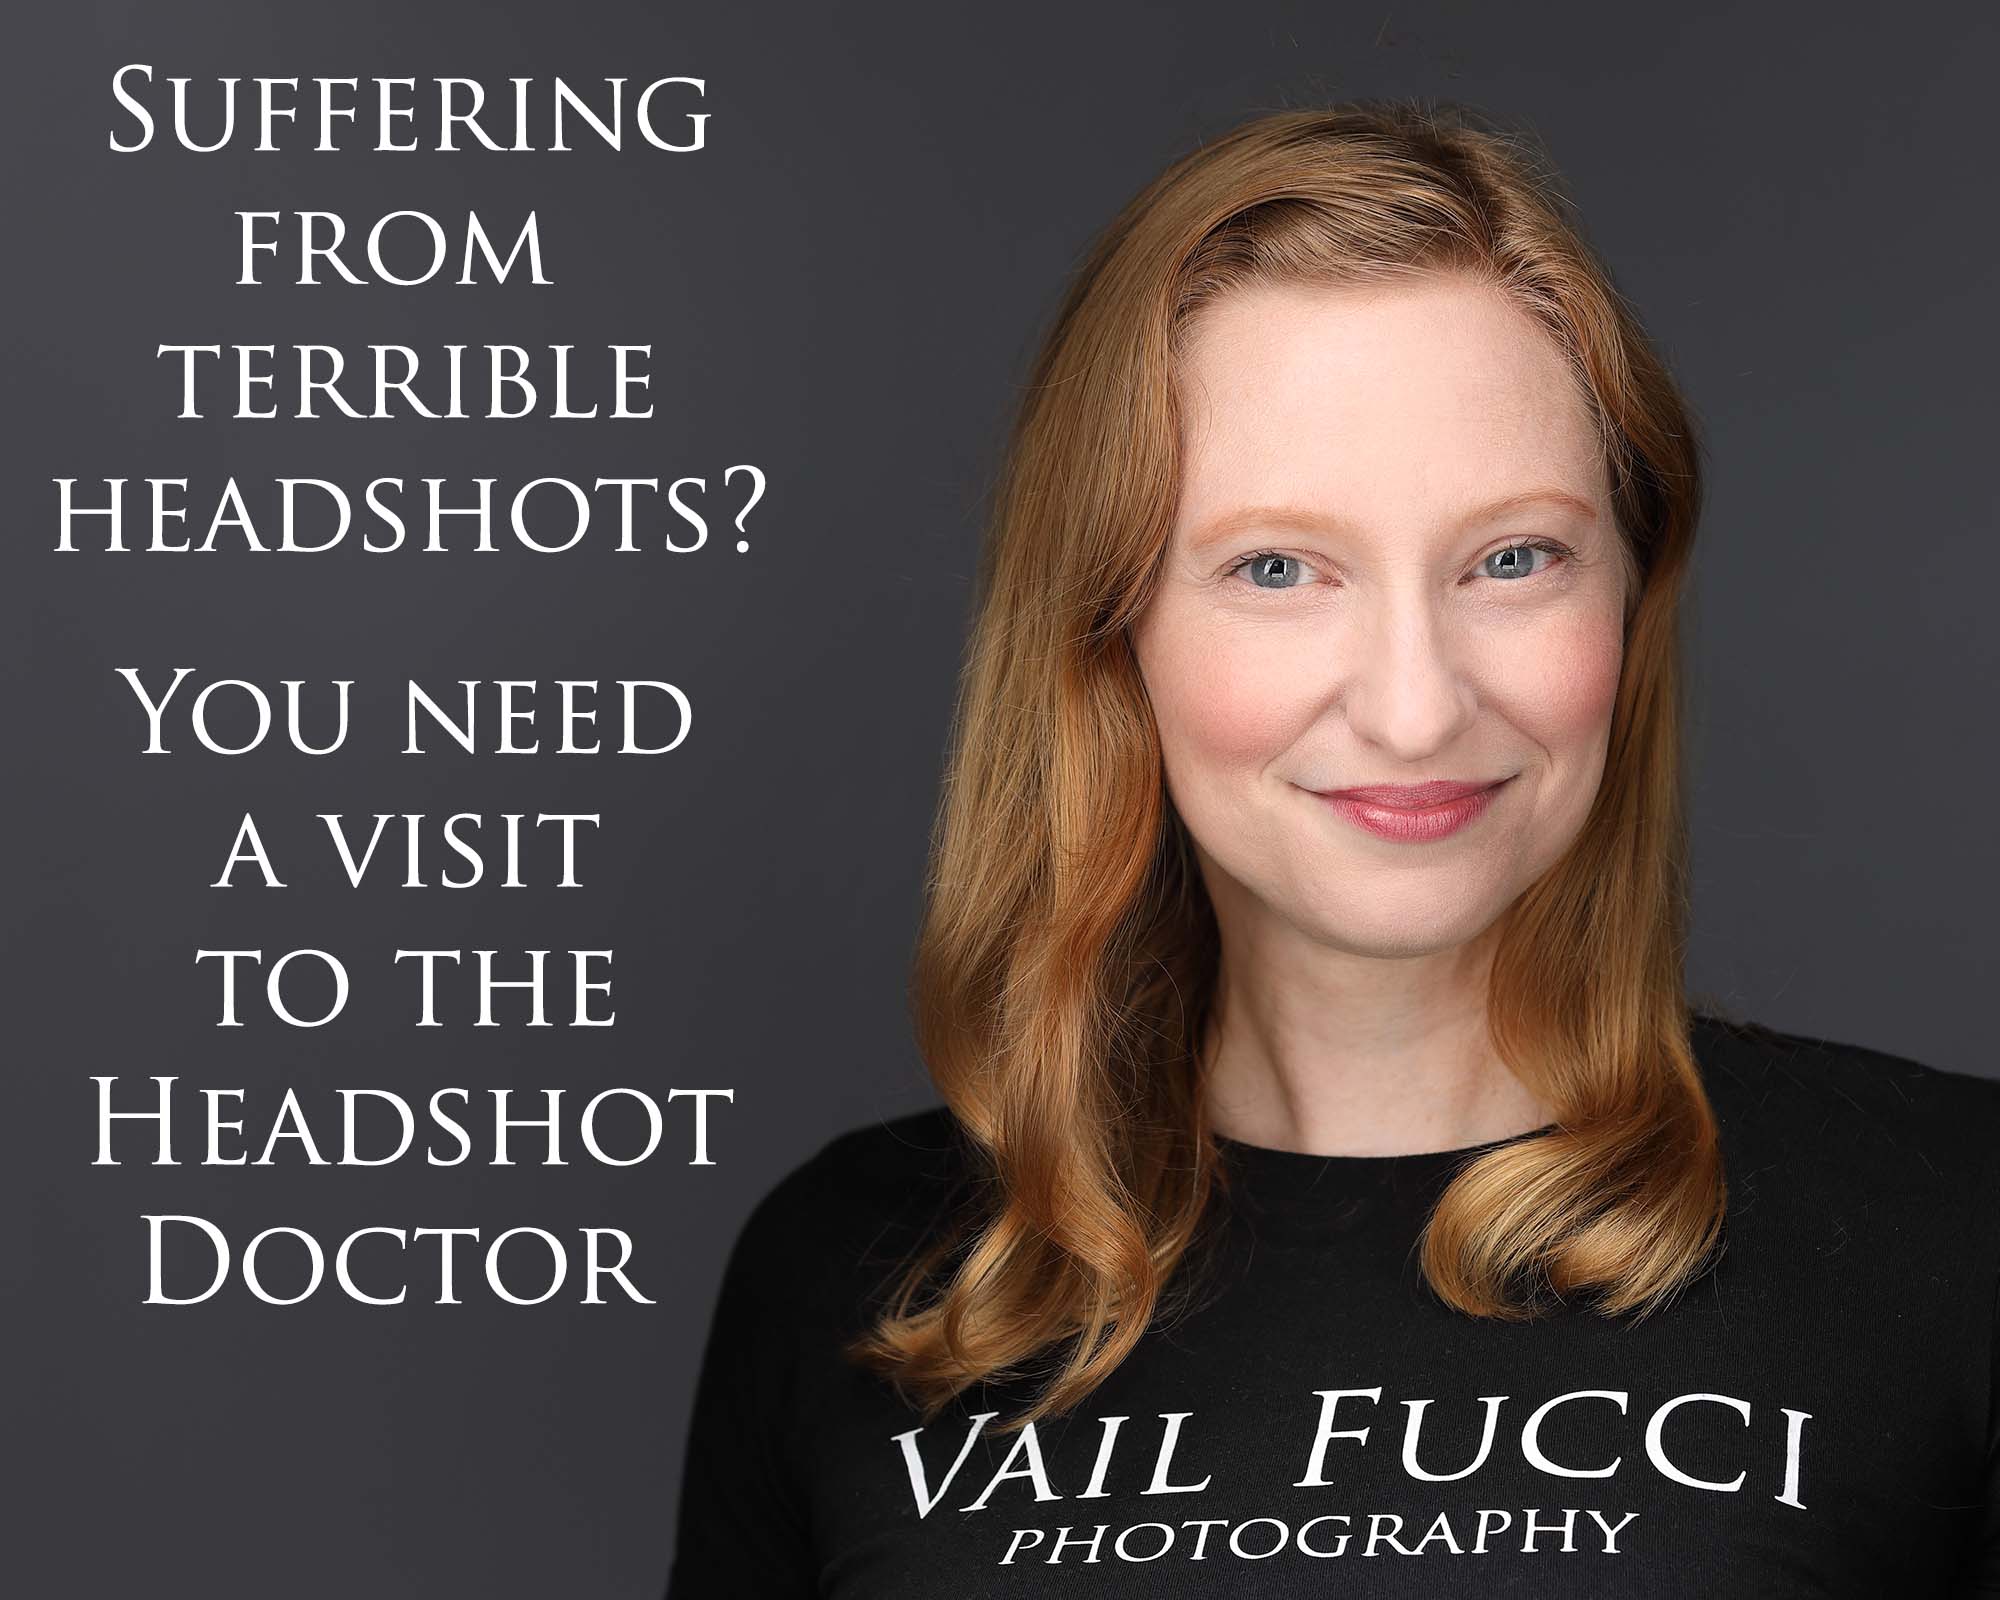 Vail fucci the headshot doctor headshot photographer